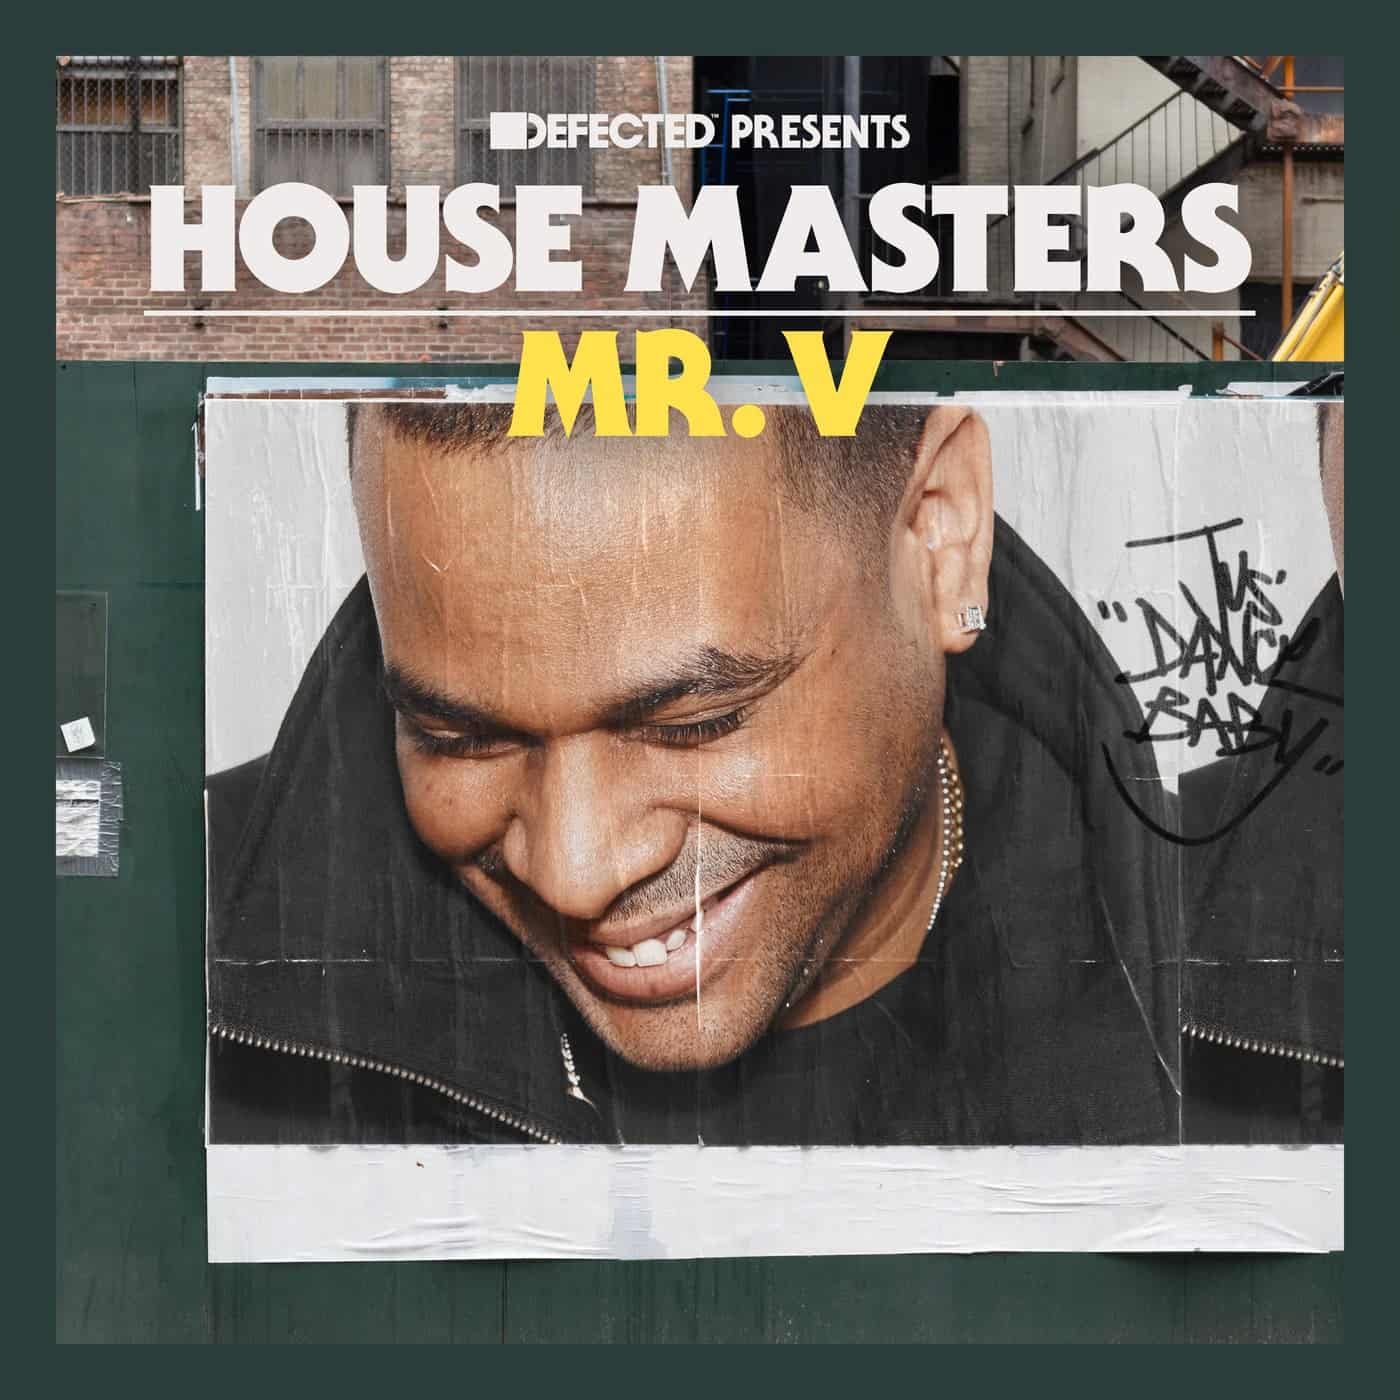 Download VA - Defected presents House Masters - Mr. V on Electrobuzz